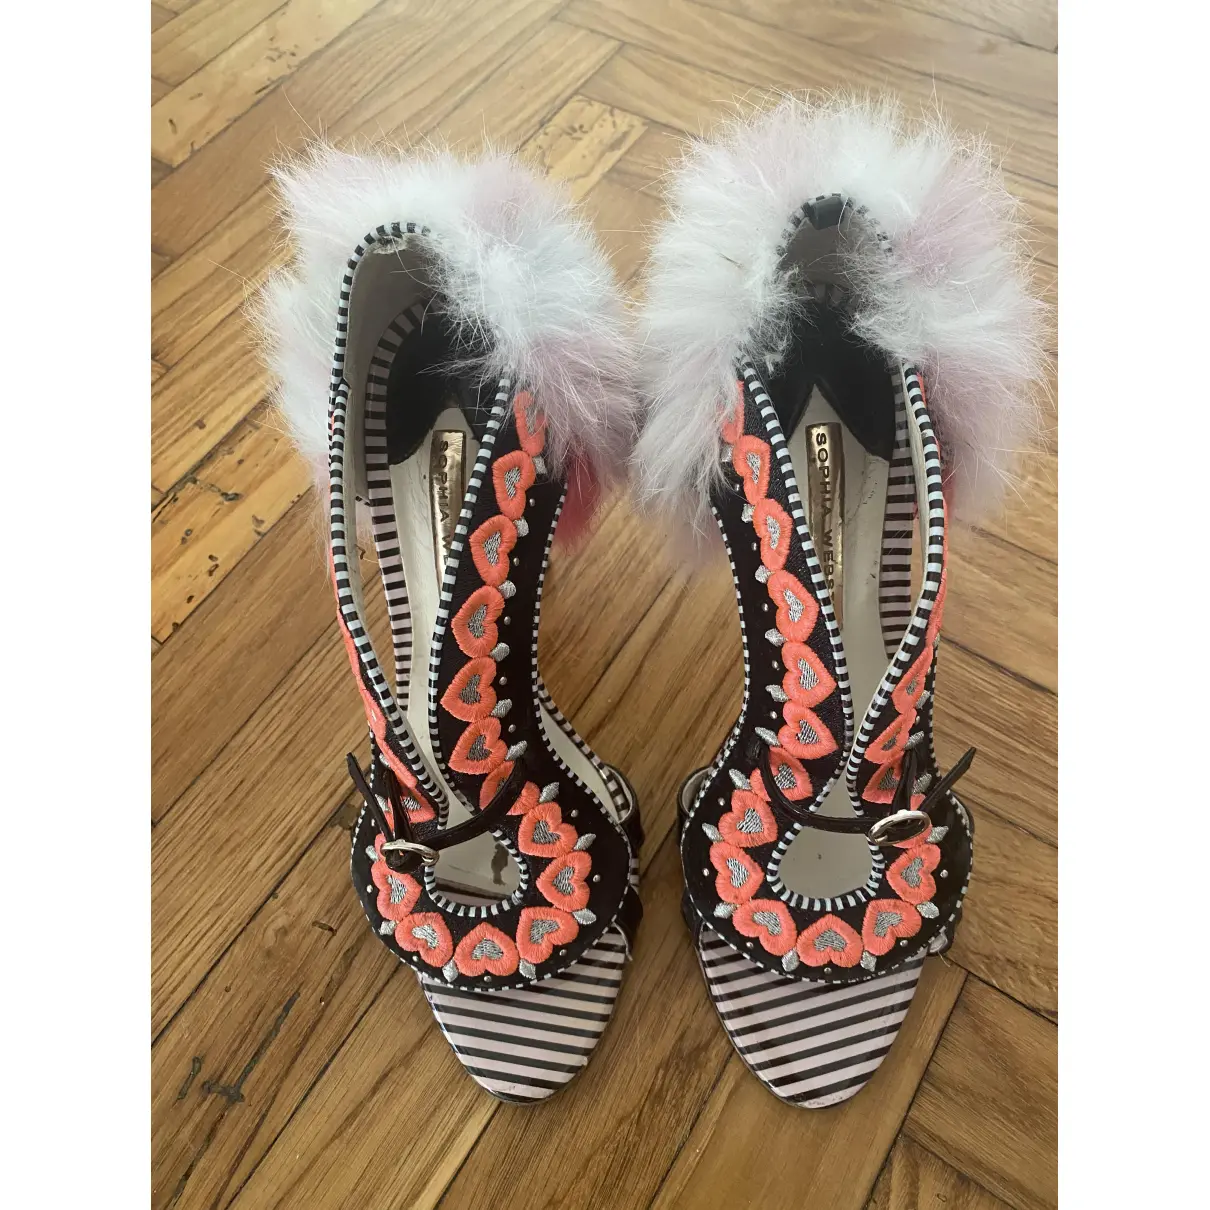 Buy Sophia Webster Rabbit sandals online